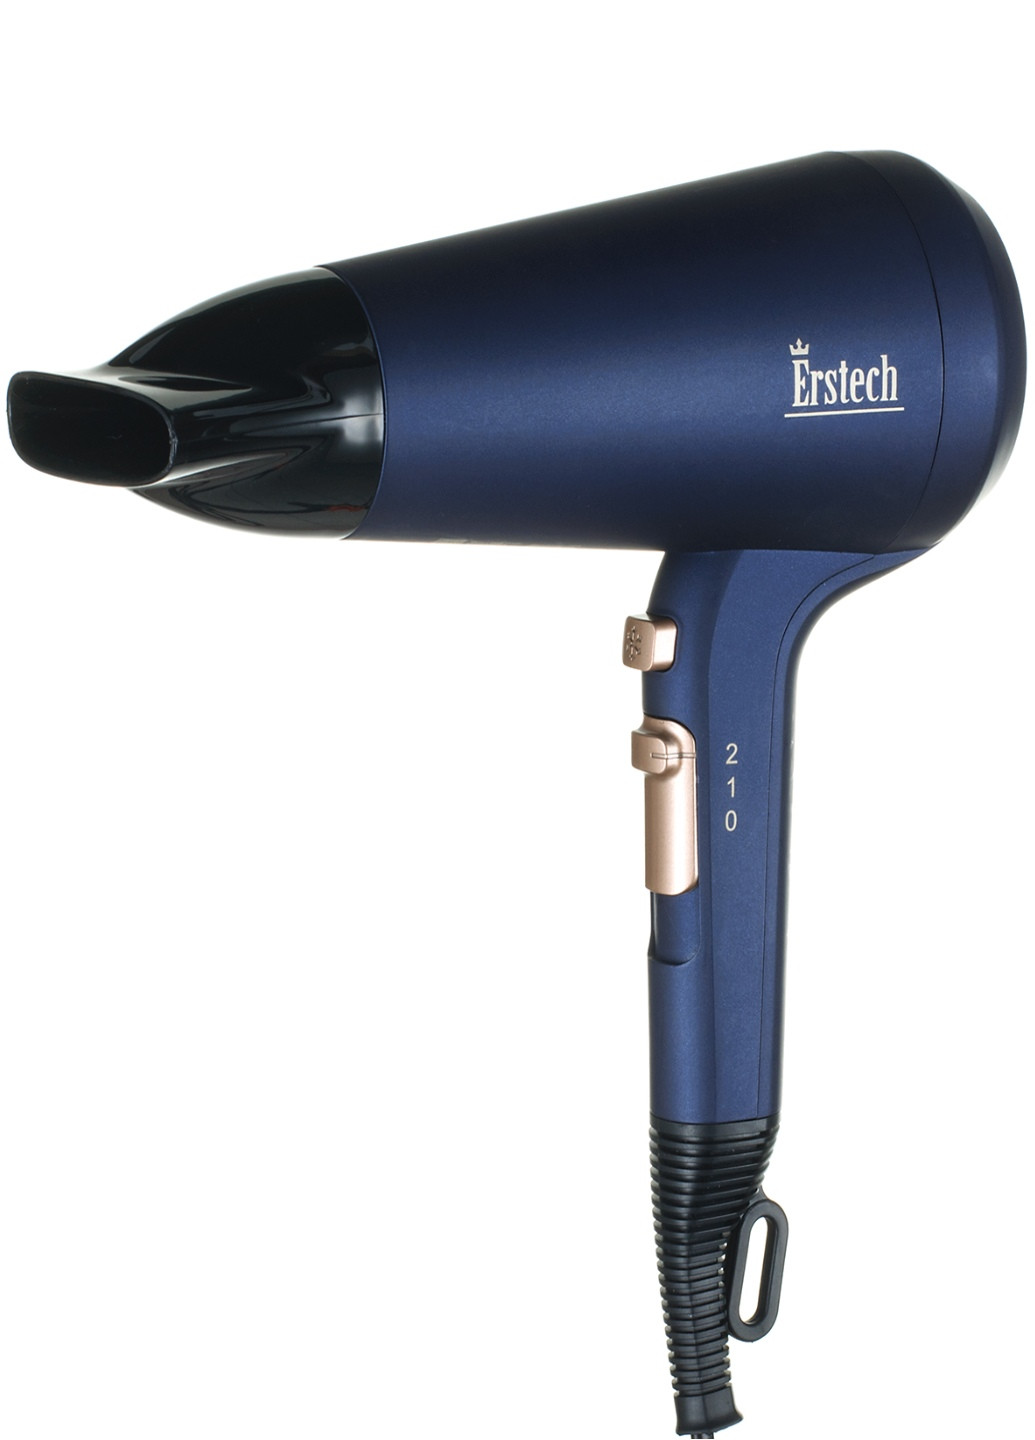 Фен электрический для сушки и укладки волос 220 В; арт.HD220/02ER; т.м. Erstech hd220/02er_blue (194794919)